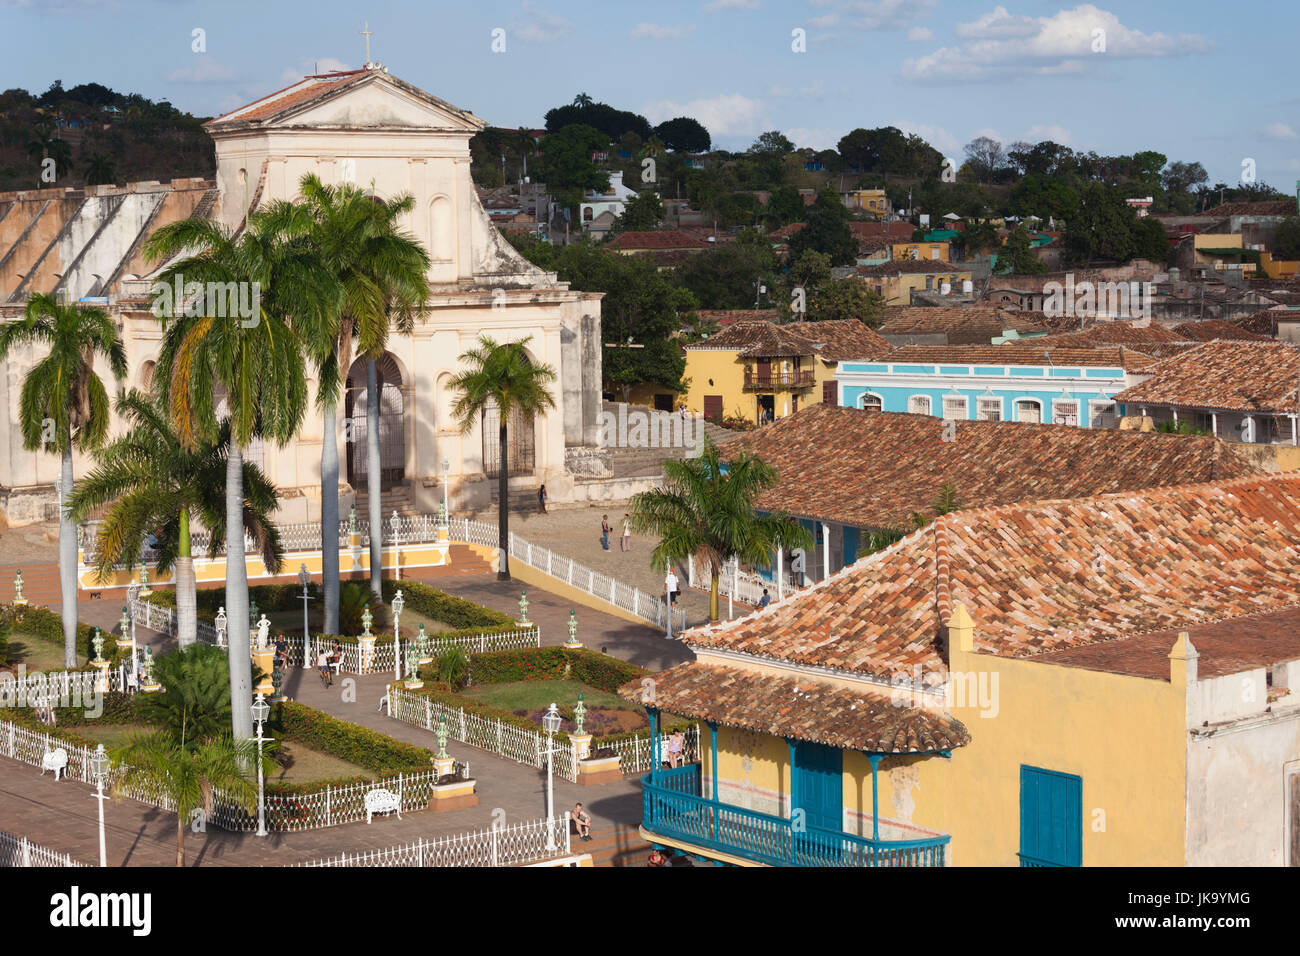 La province de Sancti Spiritus, Cuba, Trinidad, augmentation de la vue sur la Plaza Mayor, la fin de l'après-midi Banque D'Images